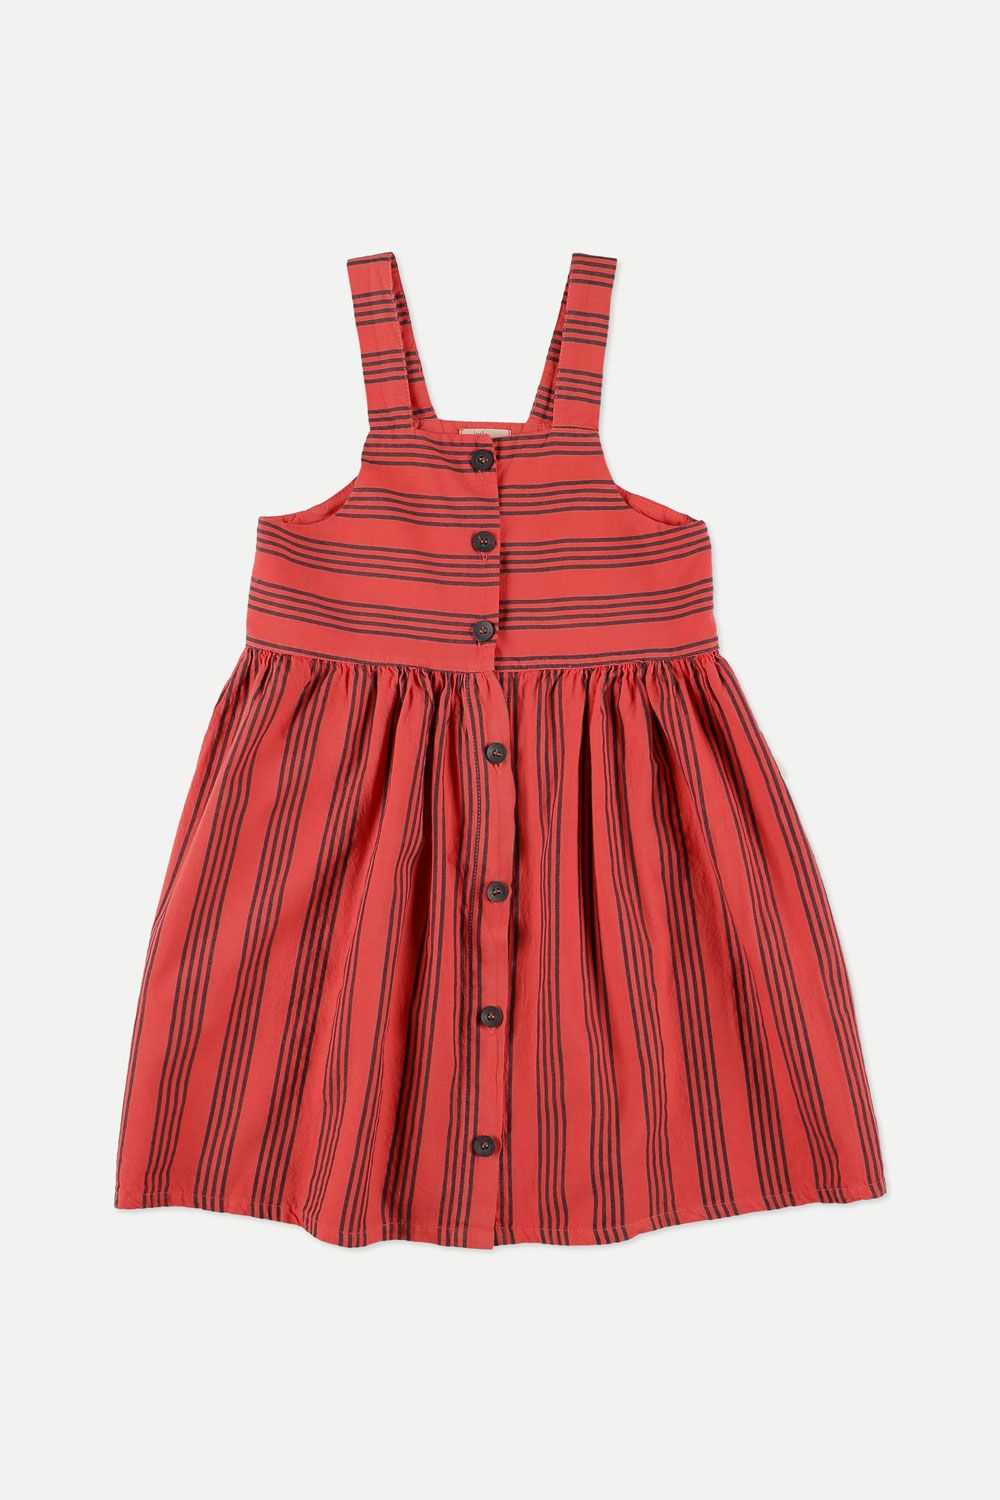 Little Cozmo vintage striped dress (SZ 2-12)